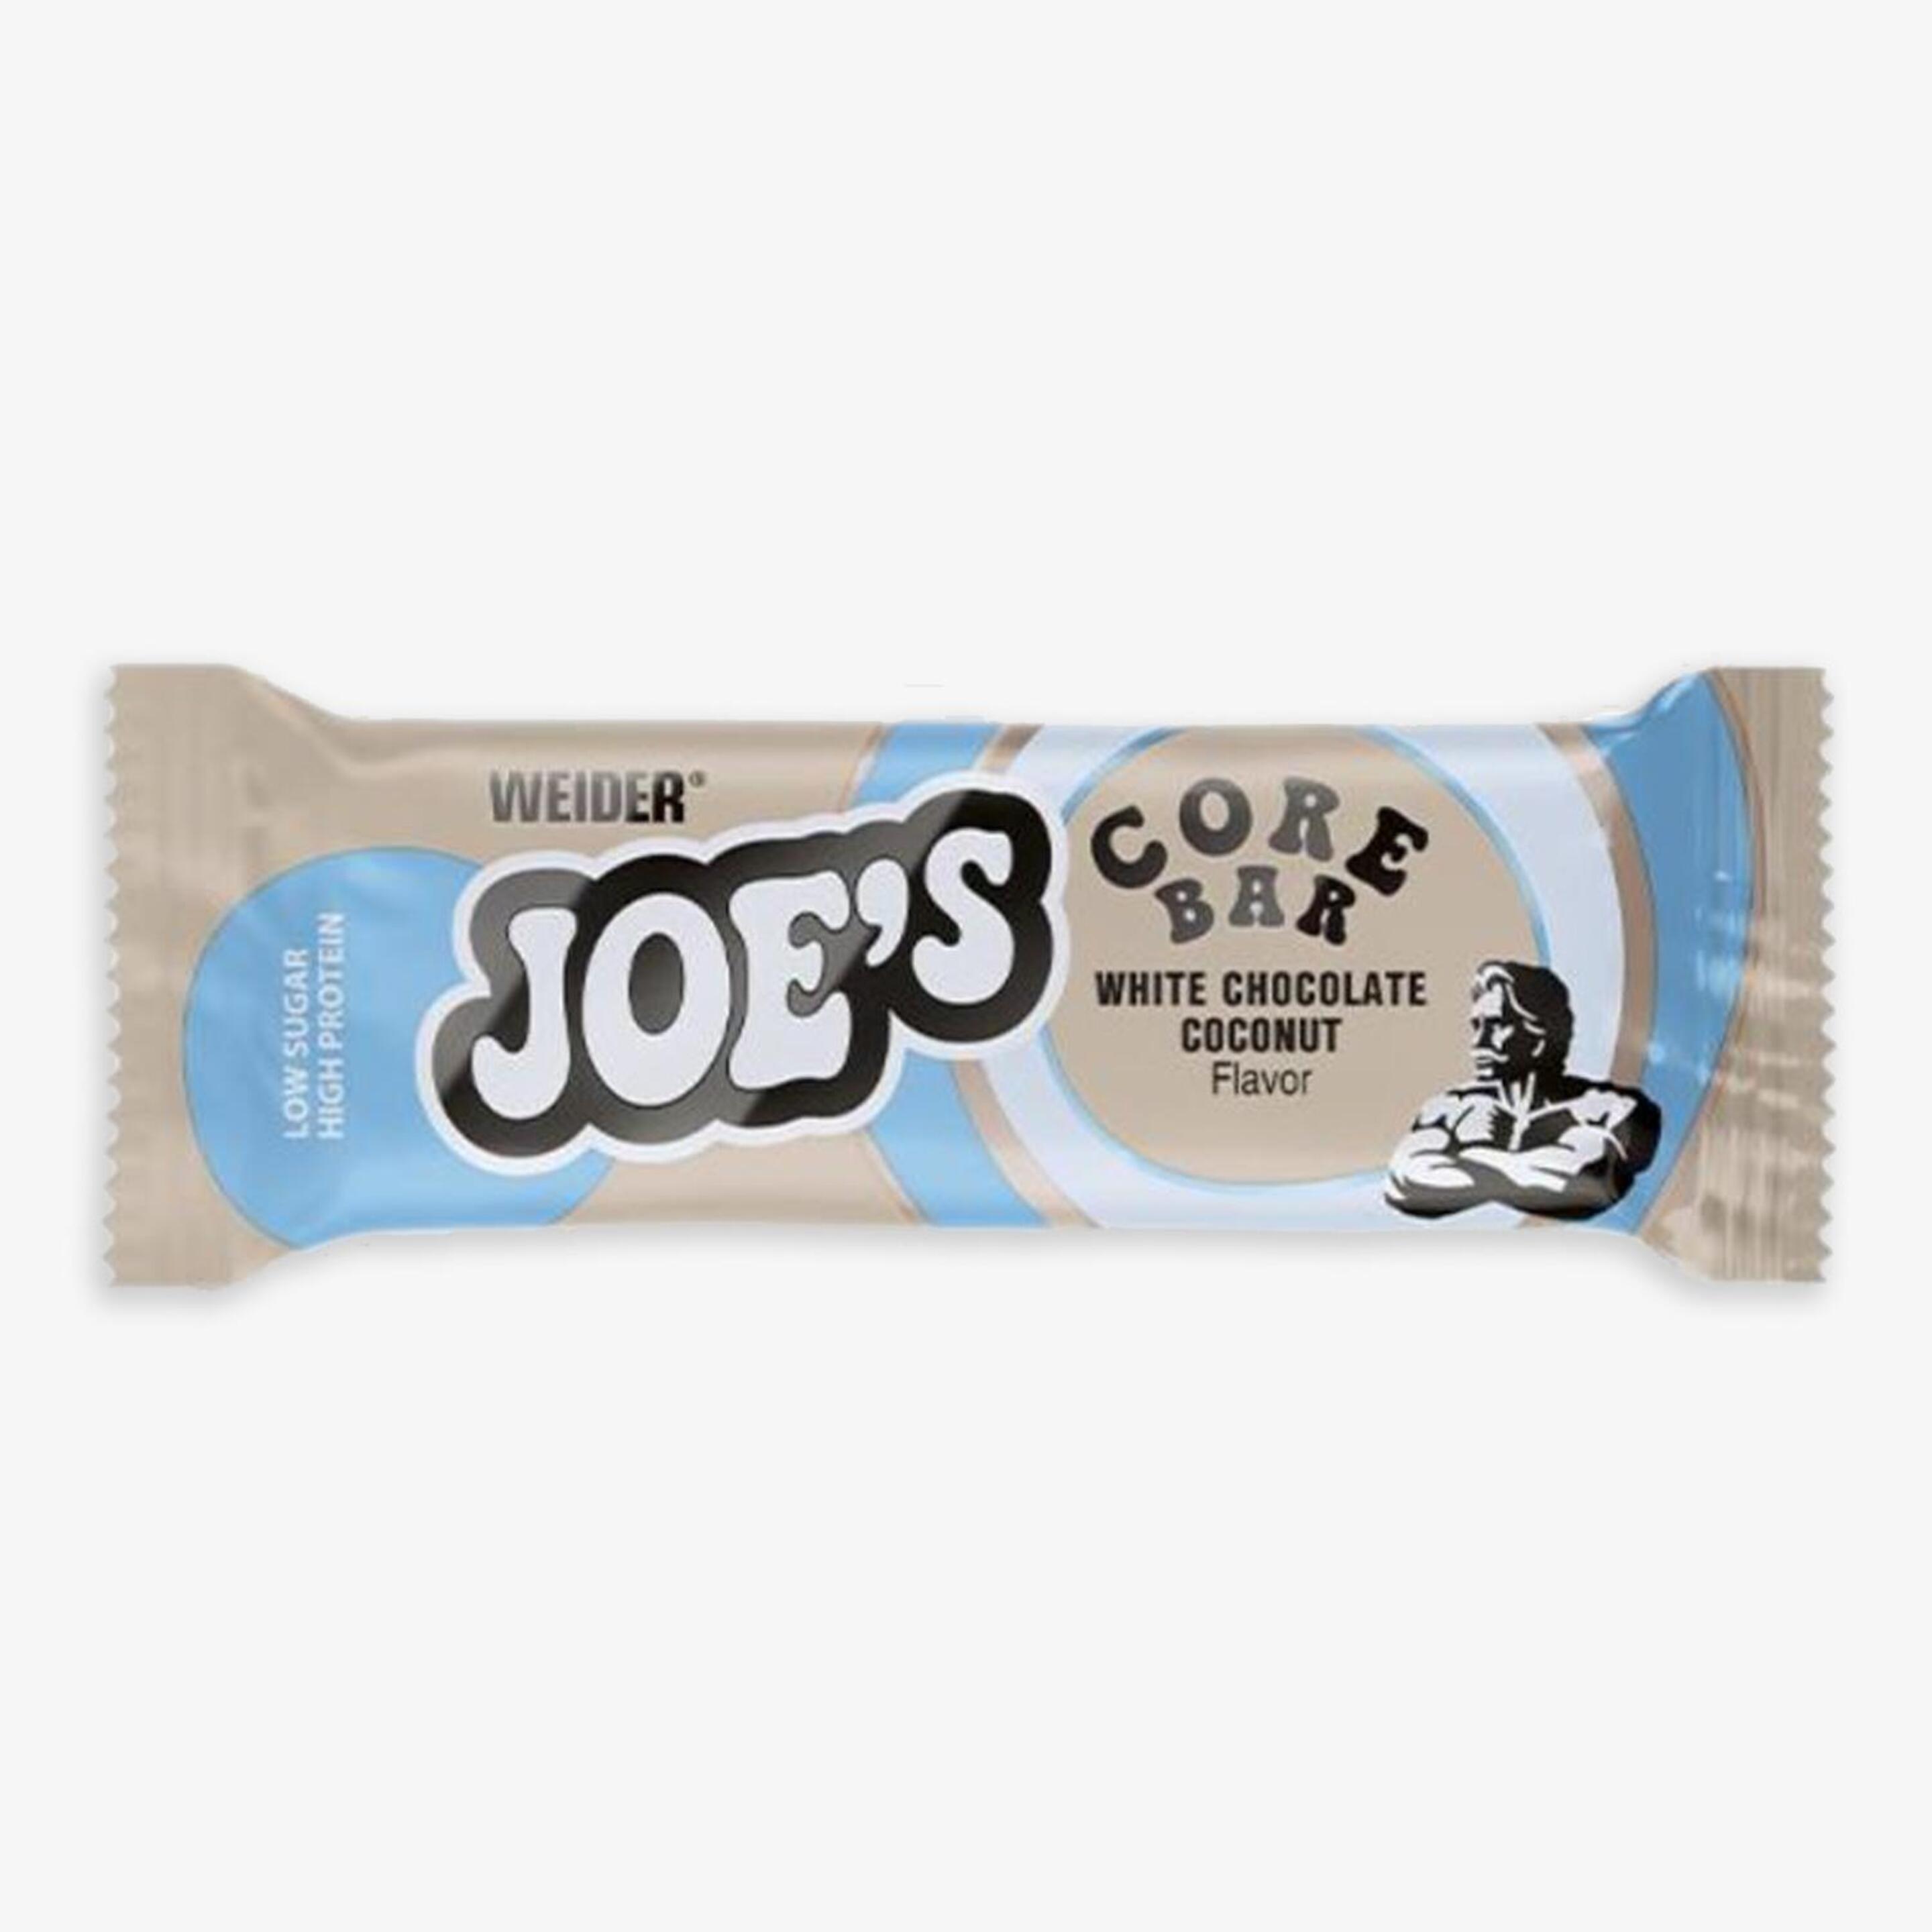 Weider Joe Core - unico - Barrita Choco Blanco 50 Gr.